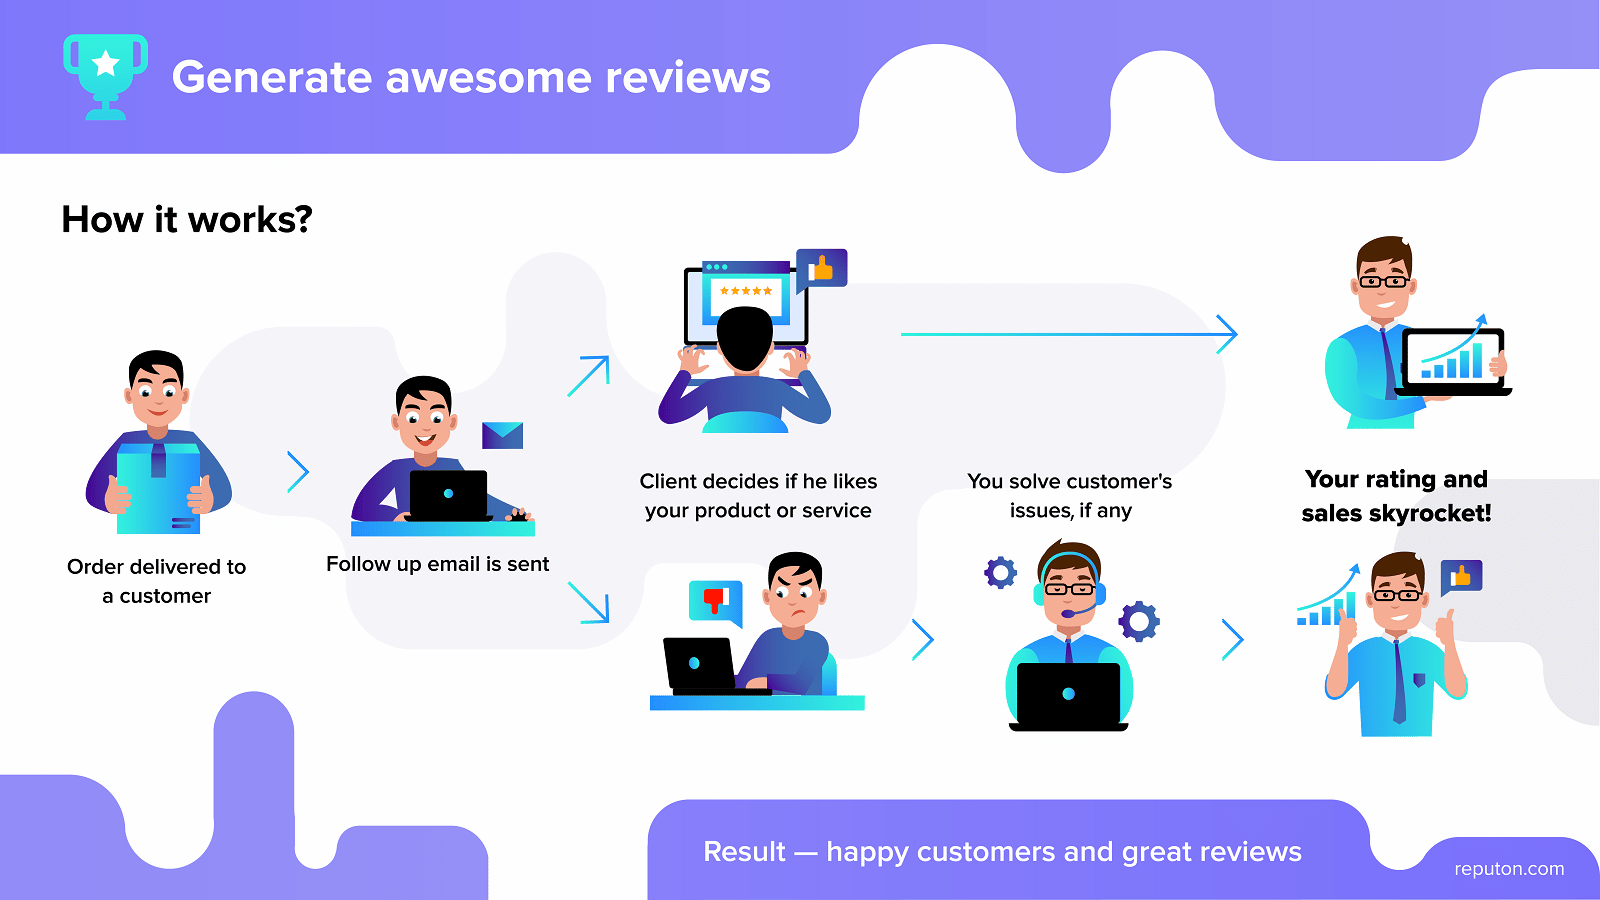 Reputon Customer Reviews App